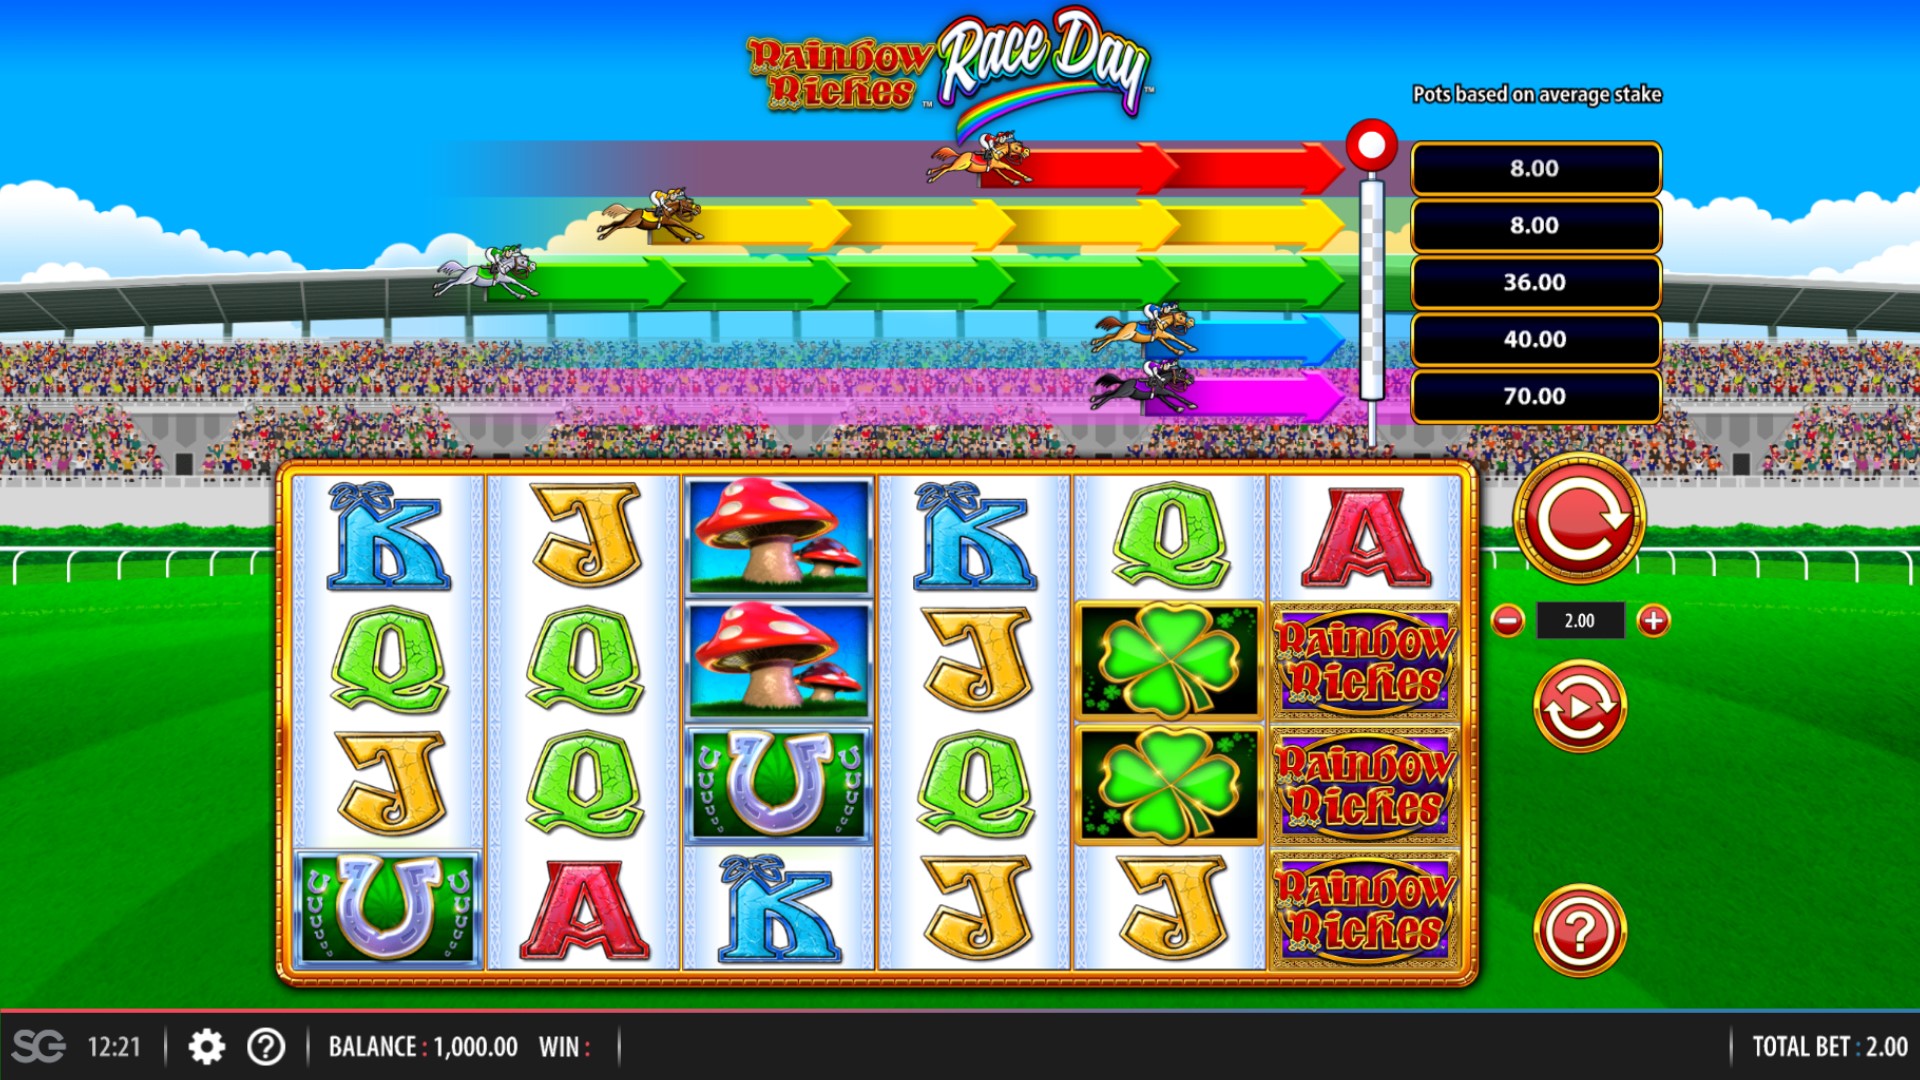 Rainbow Riches Race Day 1 SG Digital